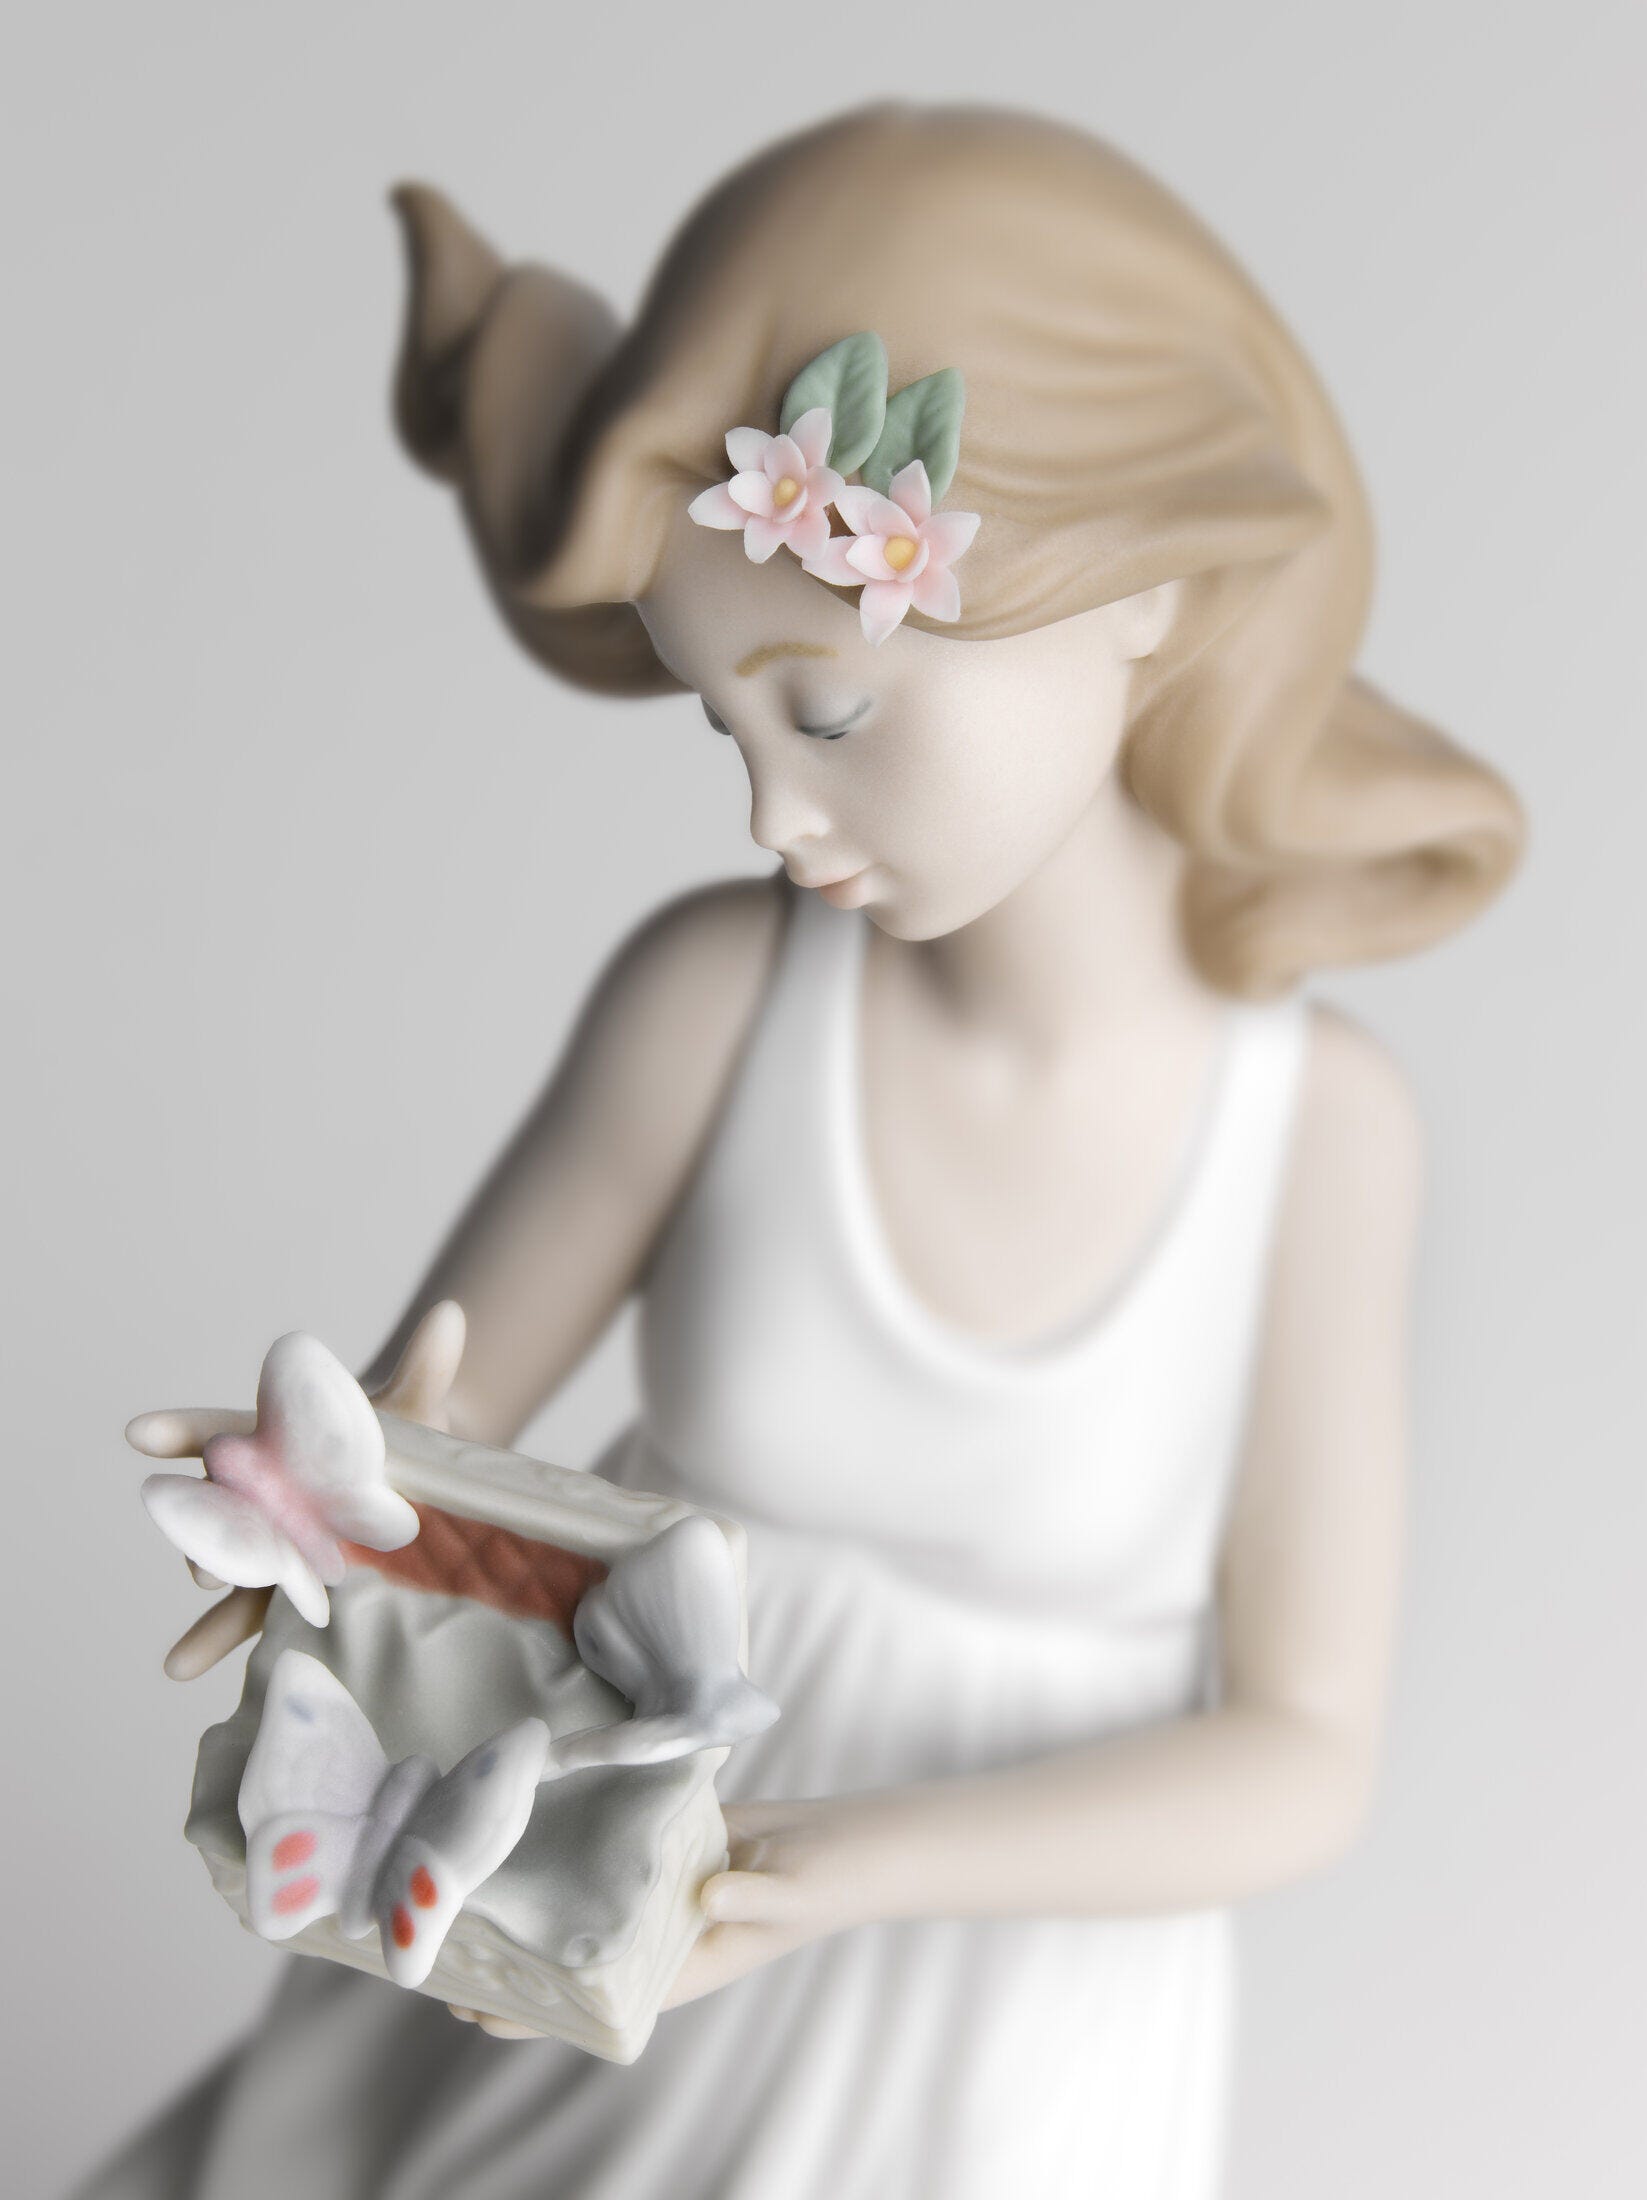 Butterfly Treasures Woman Figurine - Lladro-USA